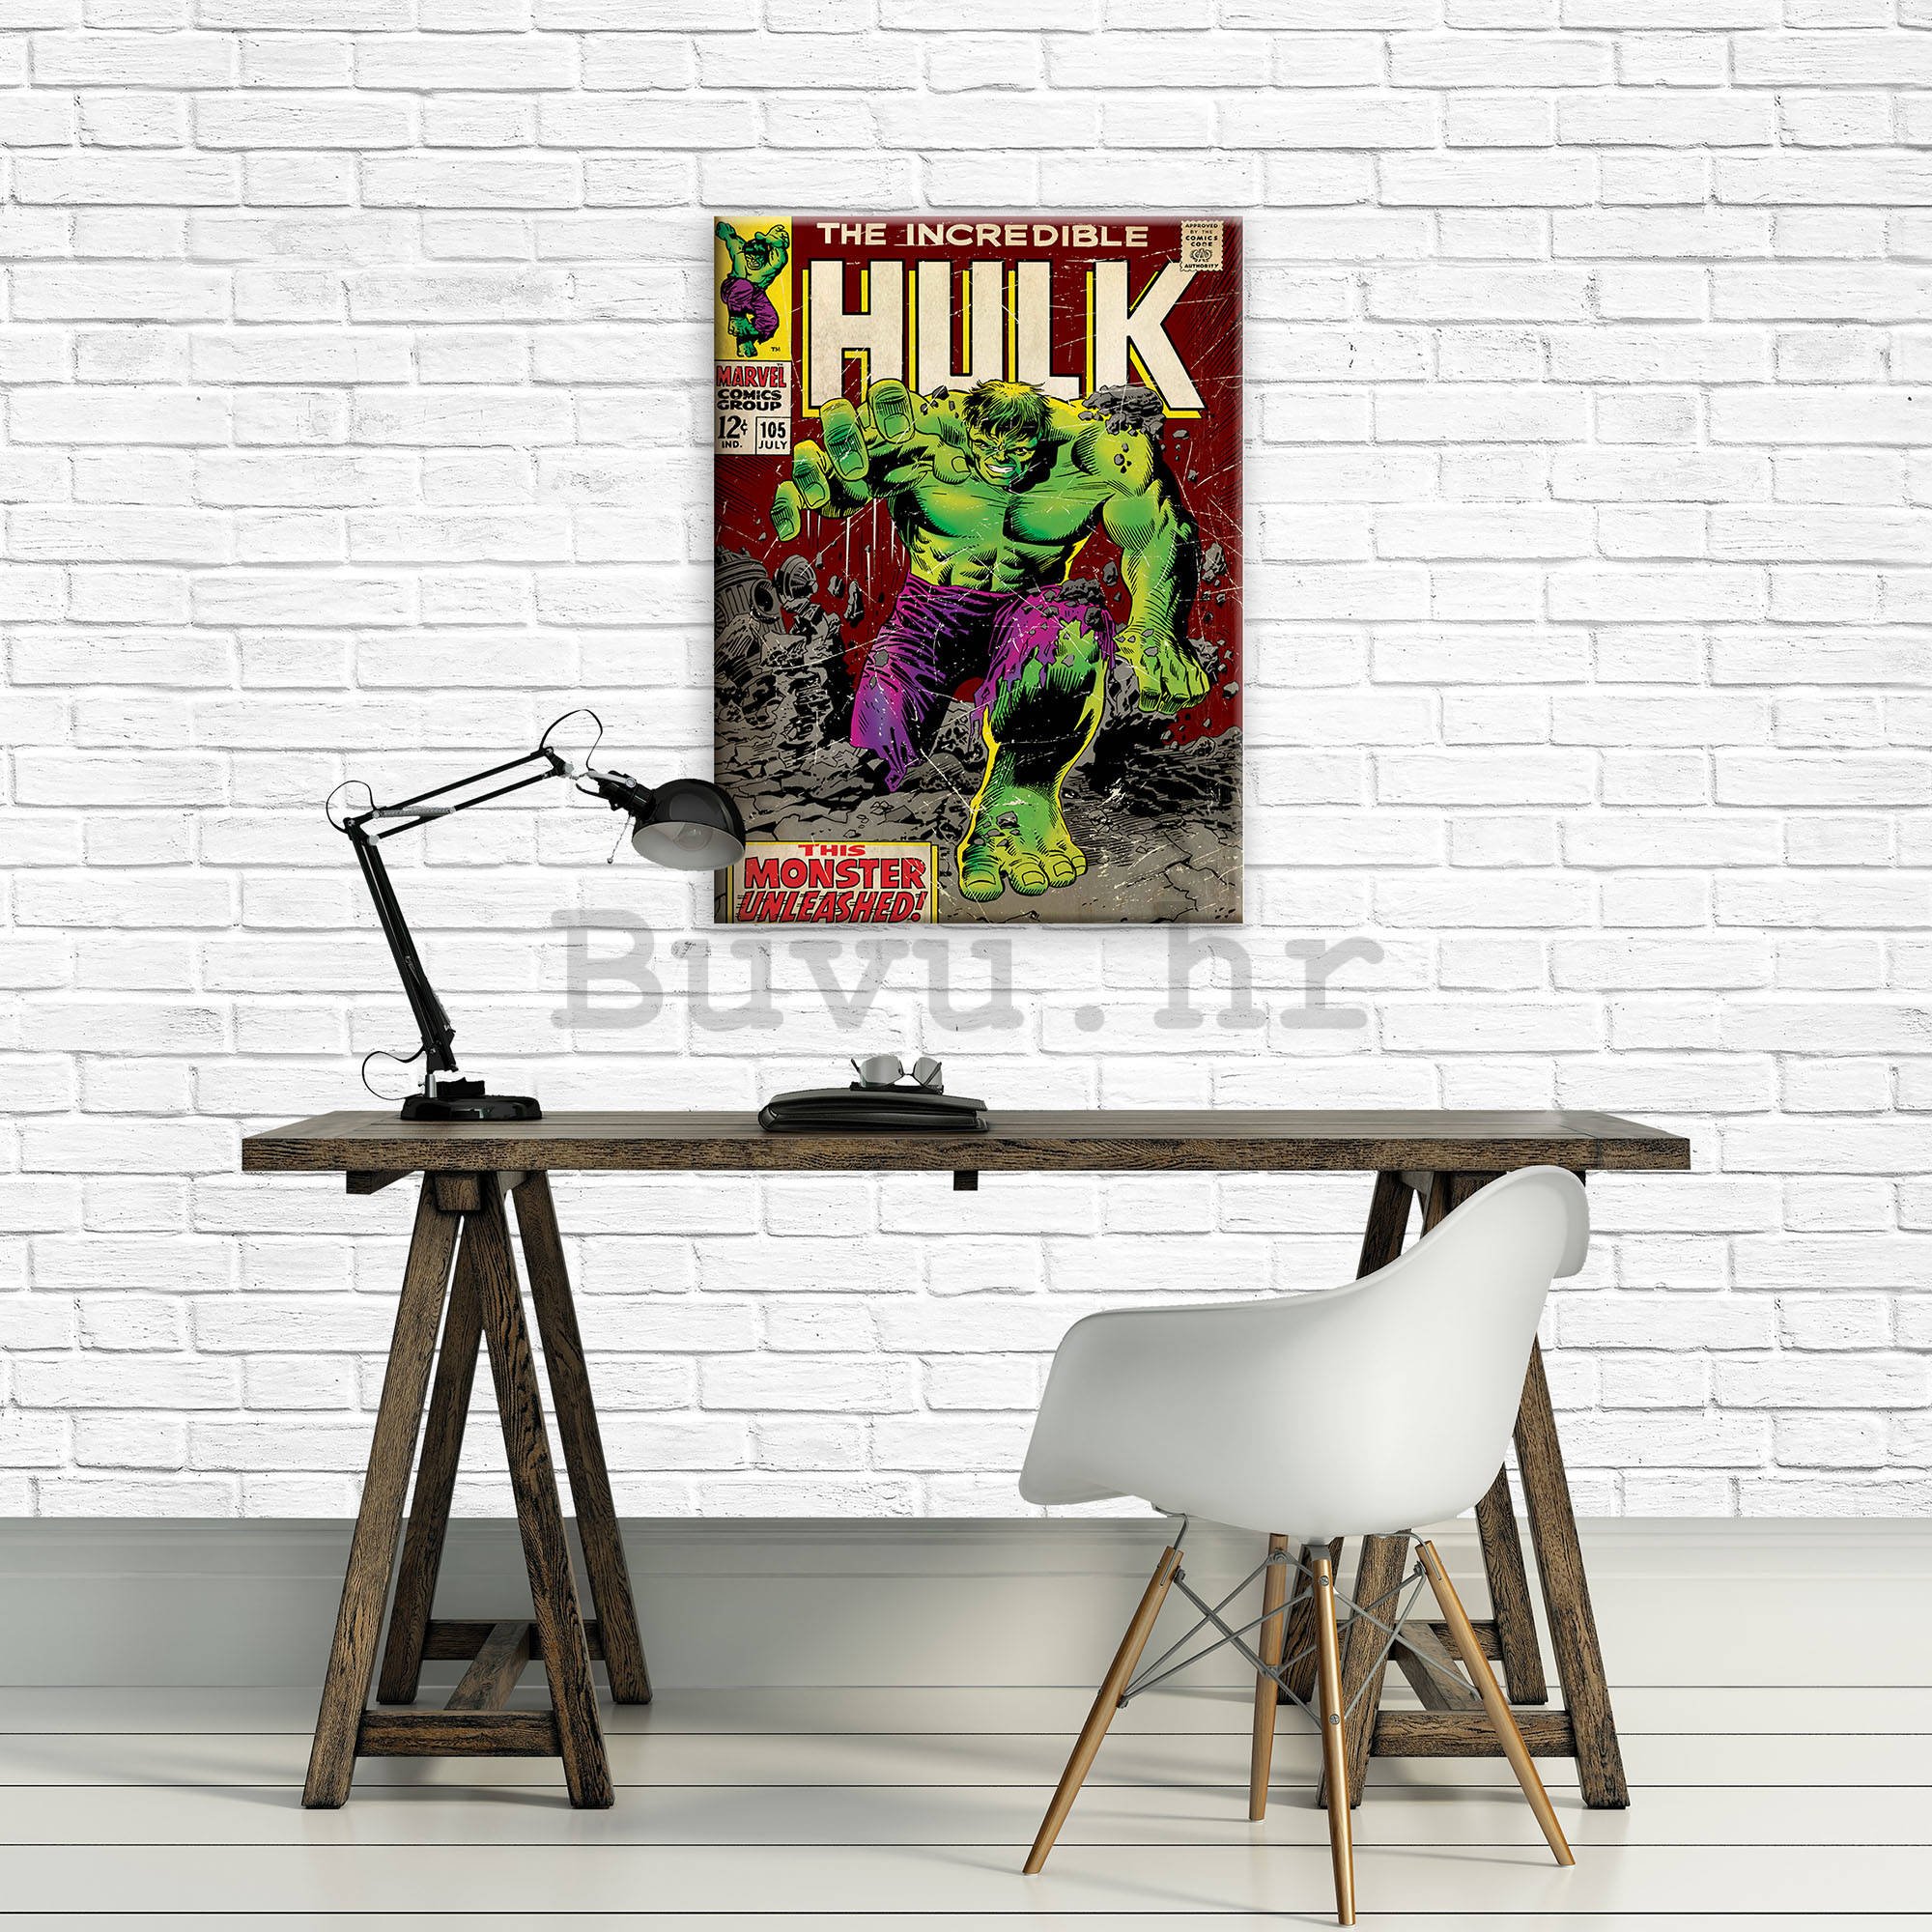 Slika na platnu: The Incredible Hulk (This Monster Unleashed!) - 80x60 cm